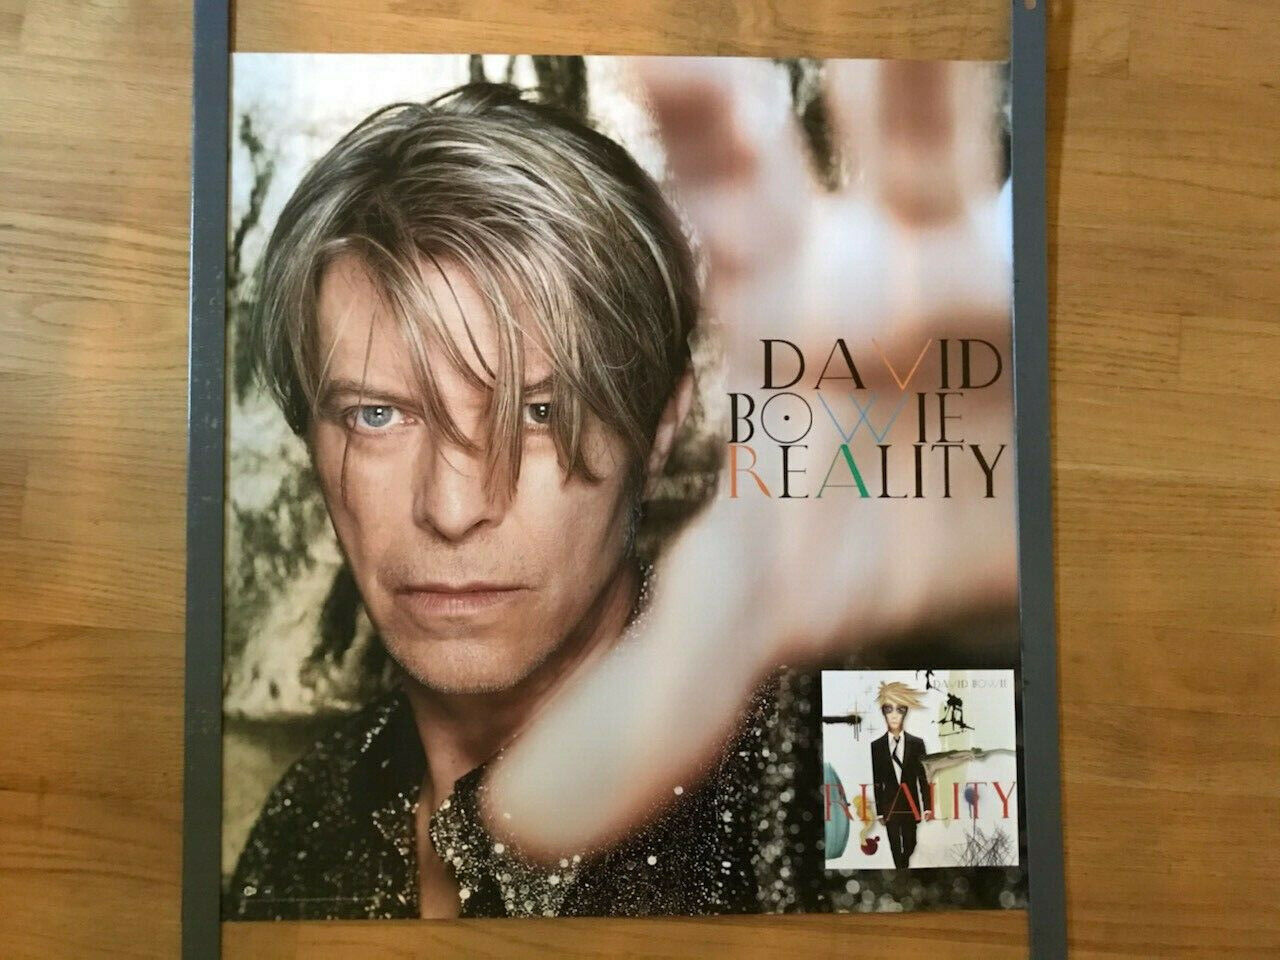 DAVID BOWIE  Reality promo poster 24x24